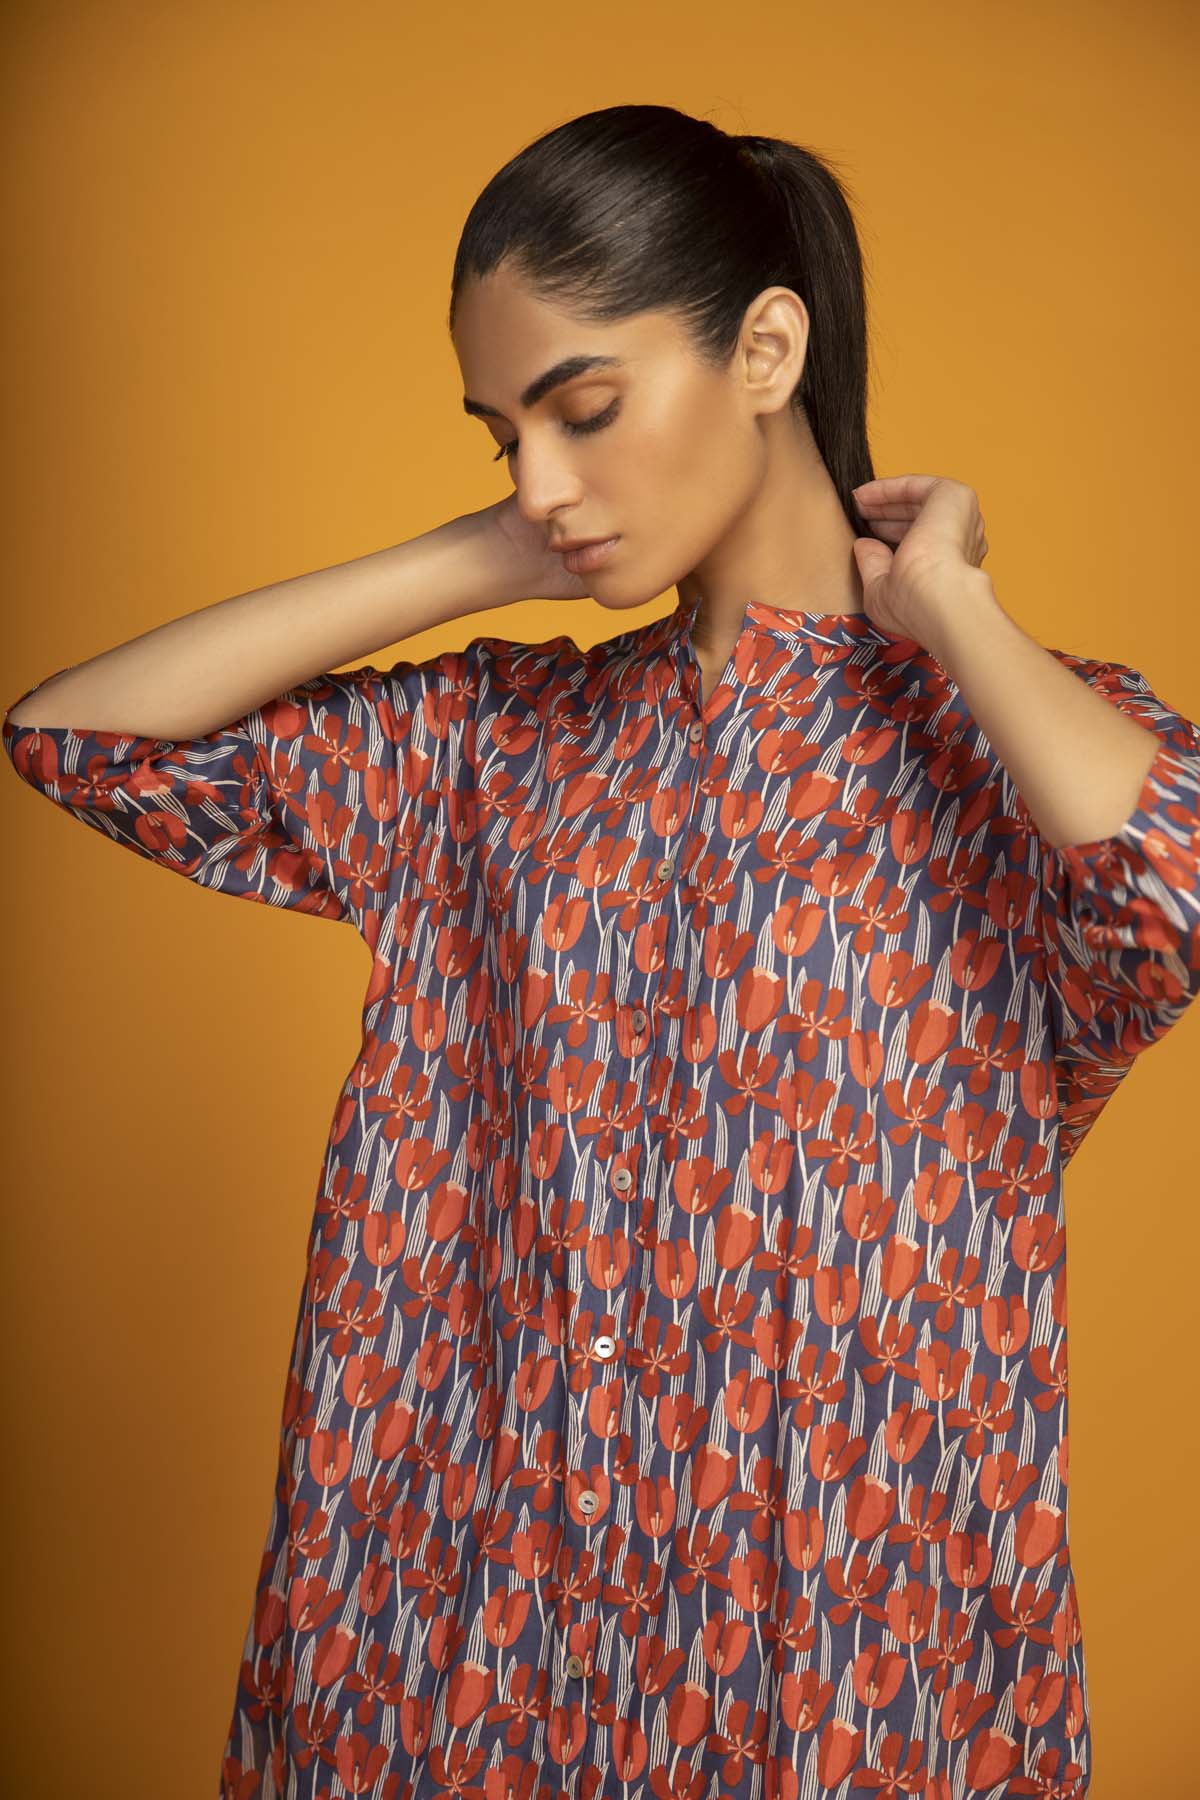 Sahar Digital Printed Lawn 2 piece Shirt & Trouser - SSL-V3-19